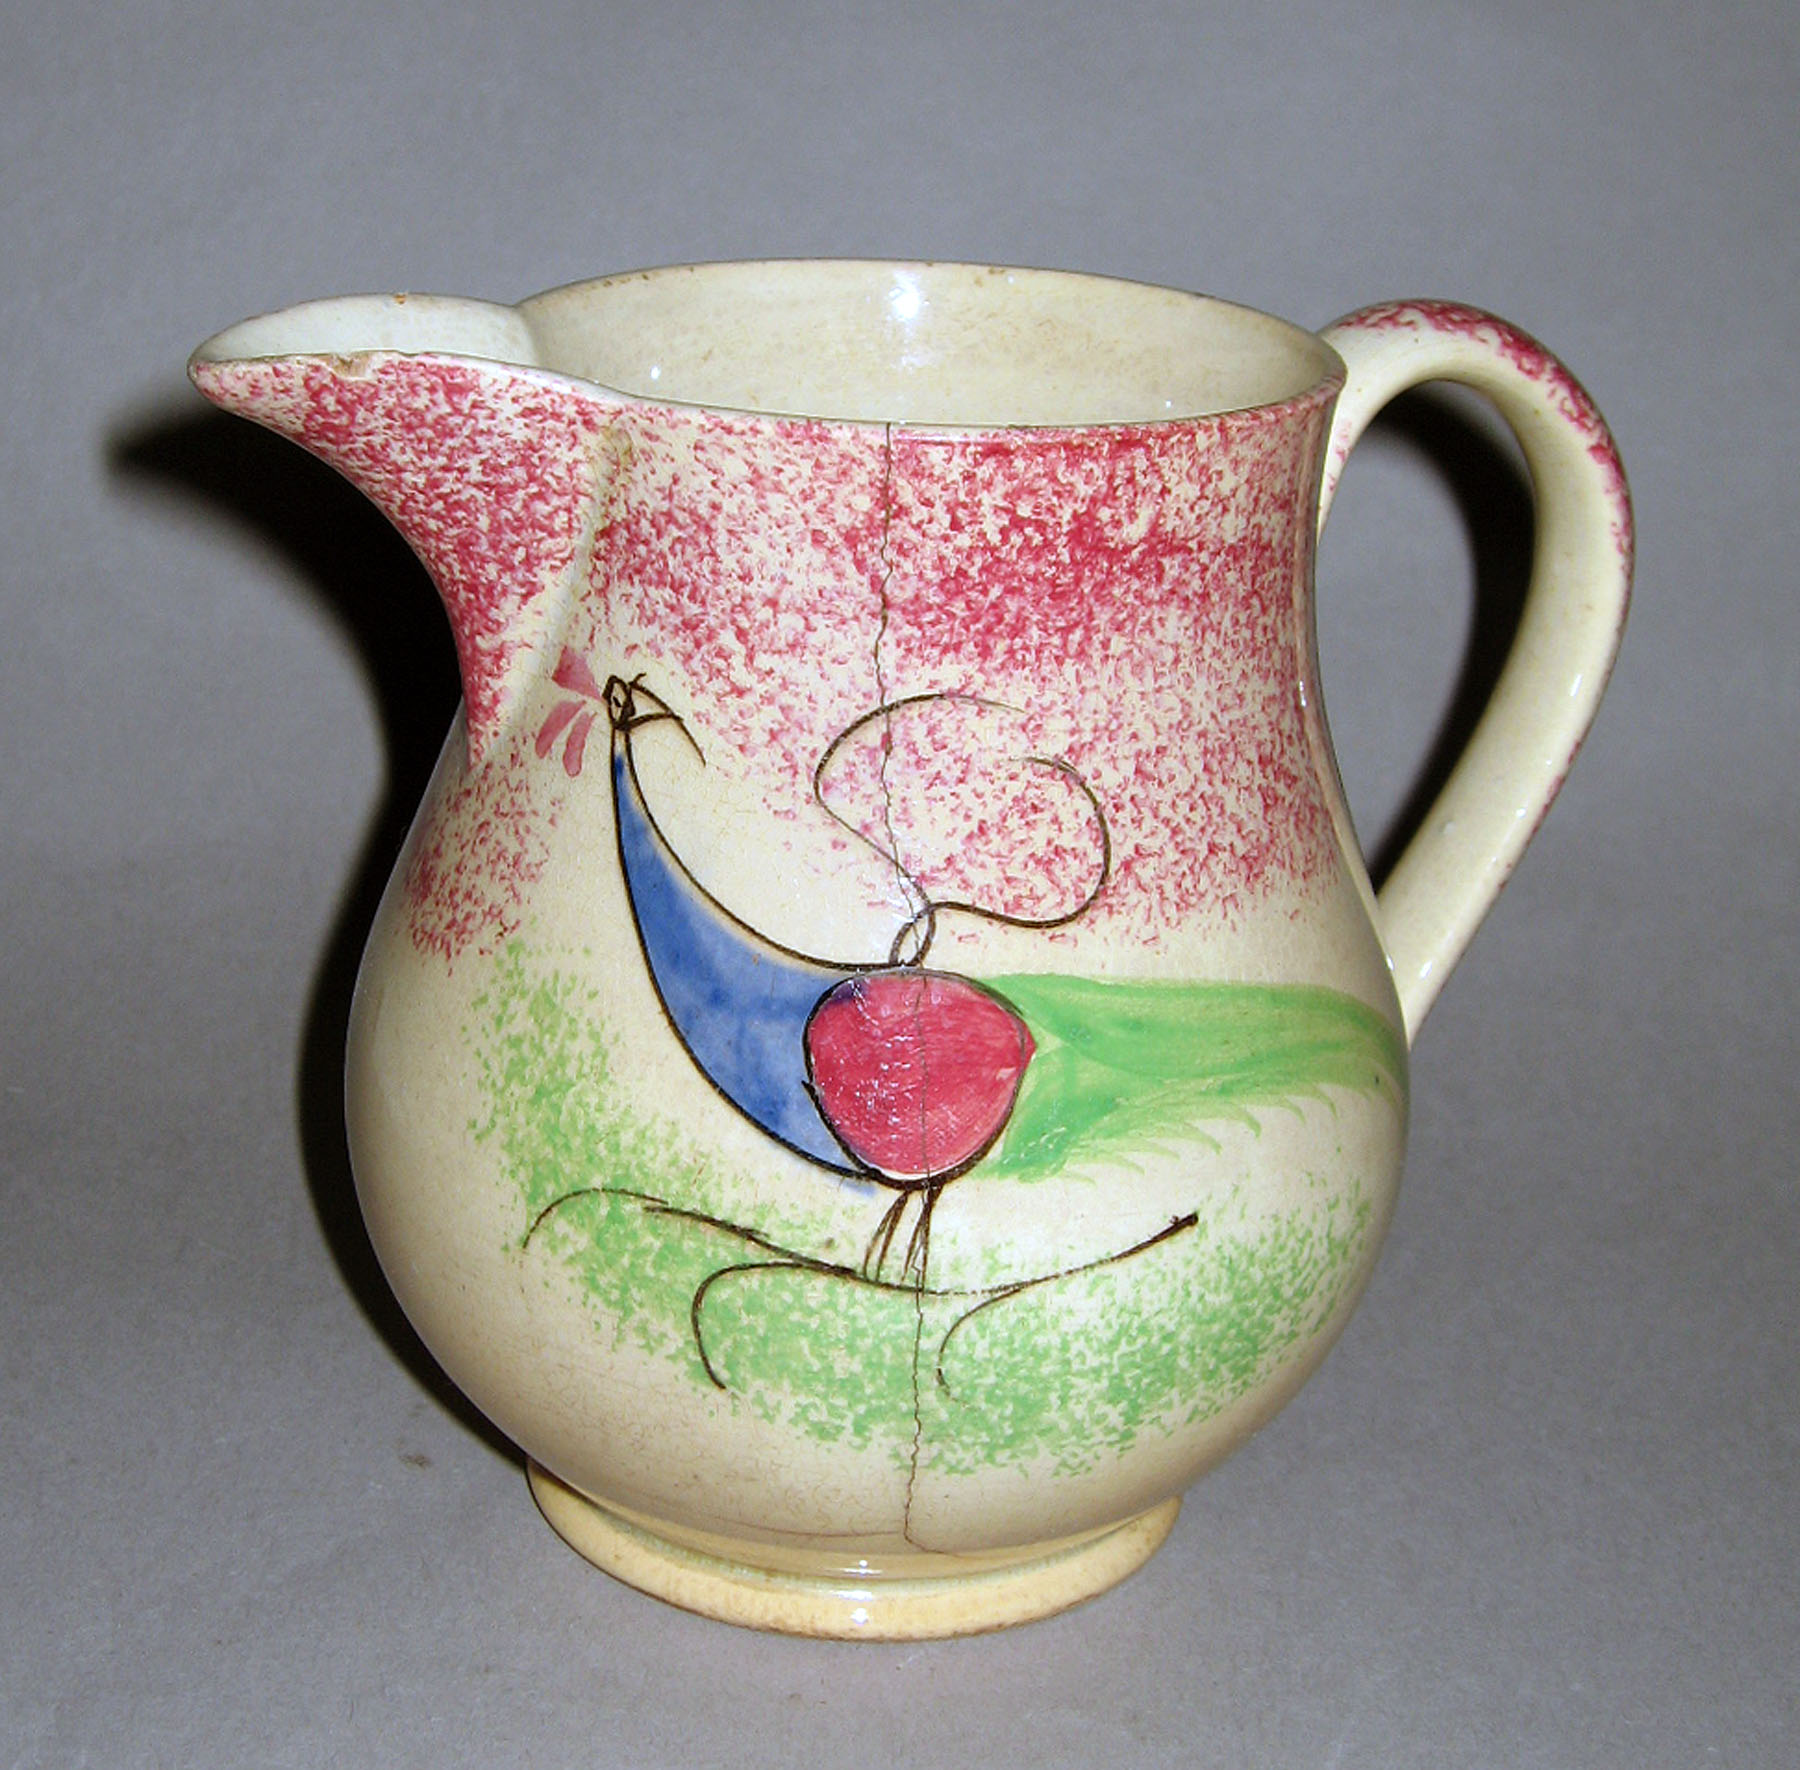 1965.0998 Spatterware jug